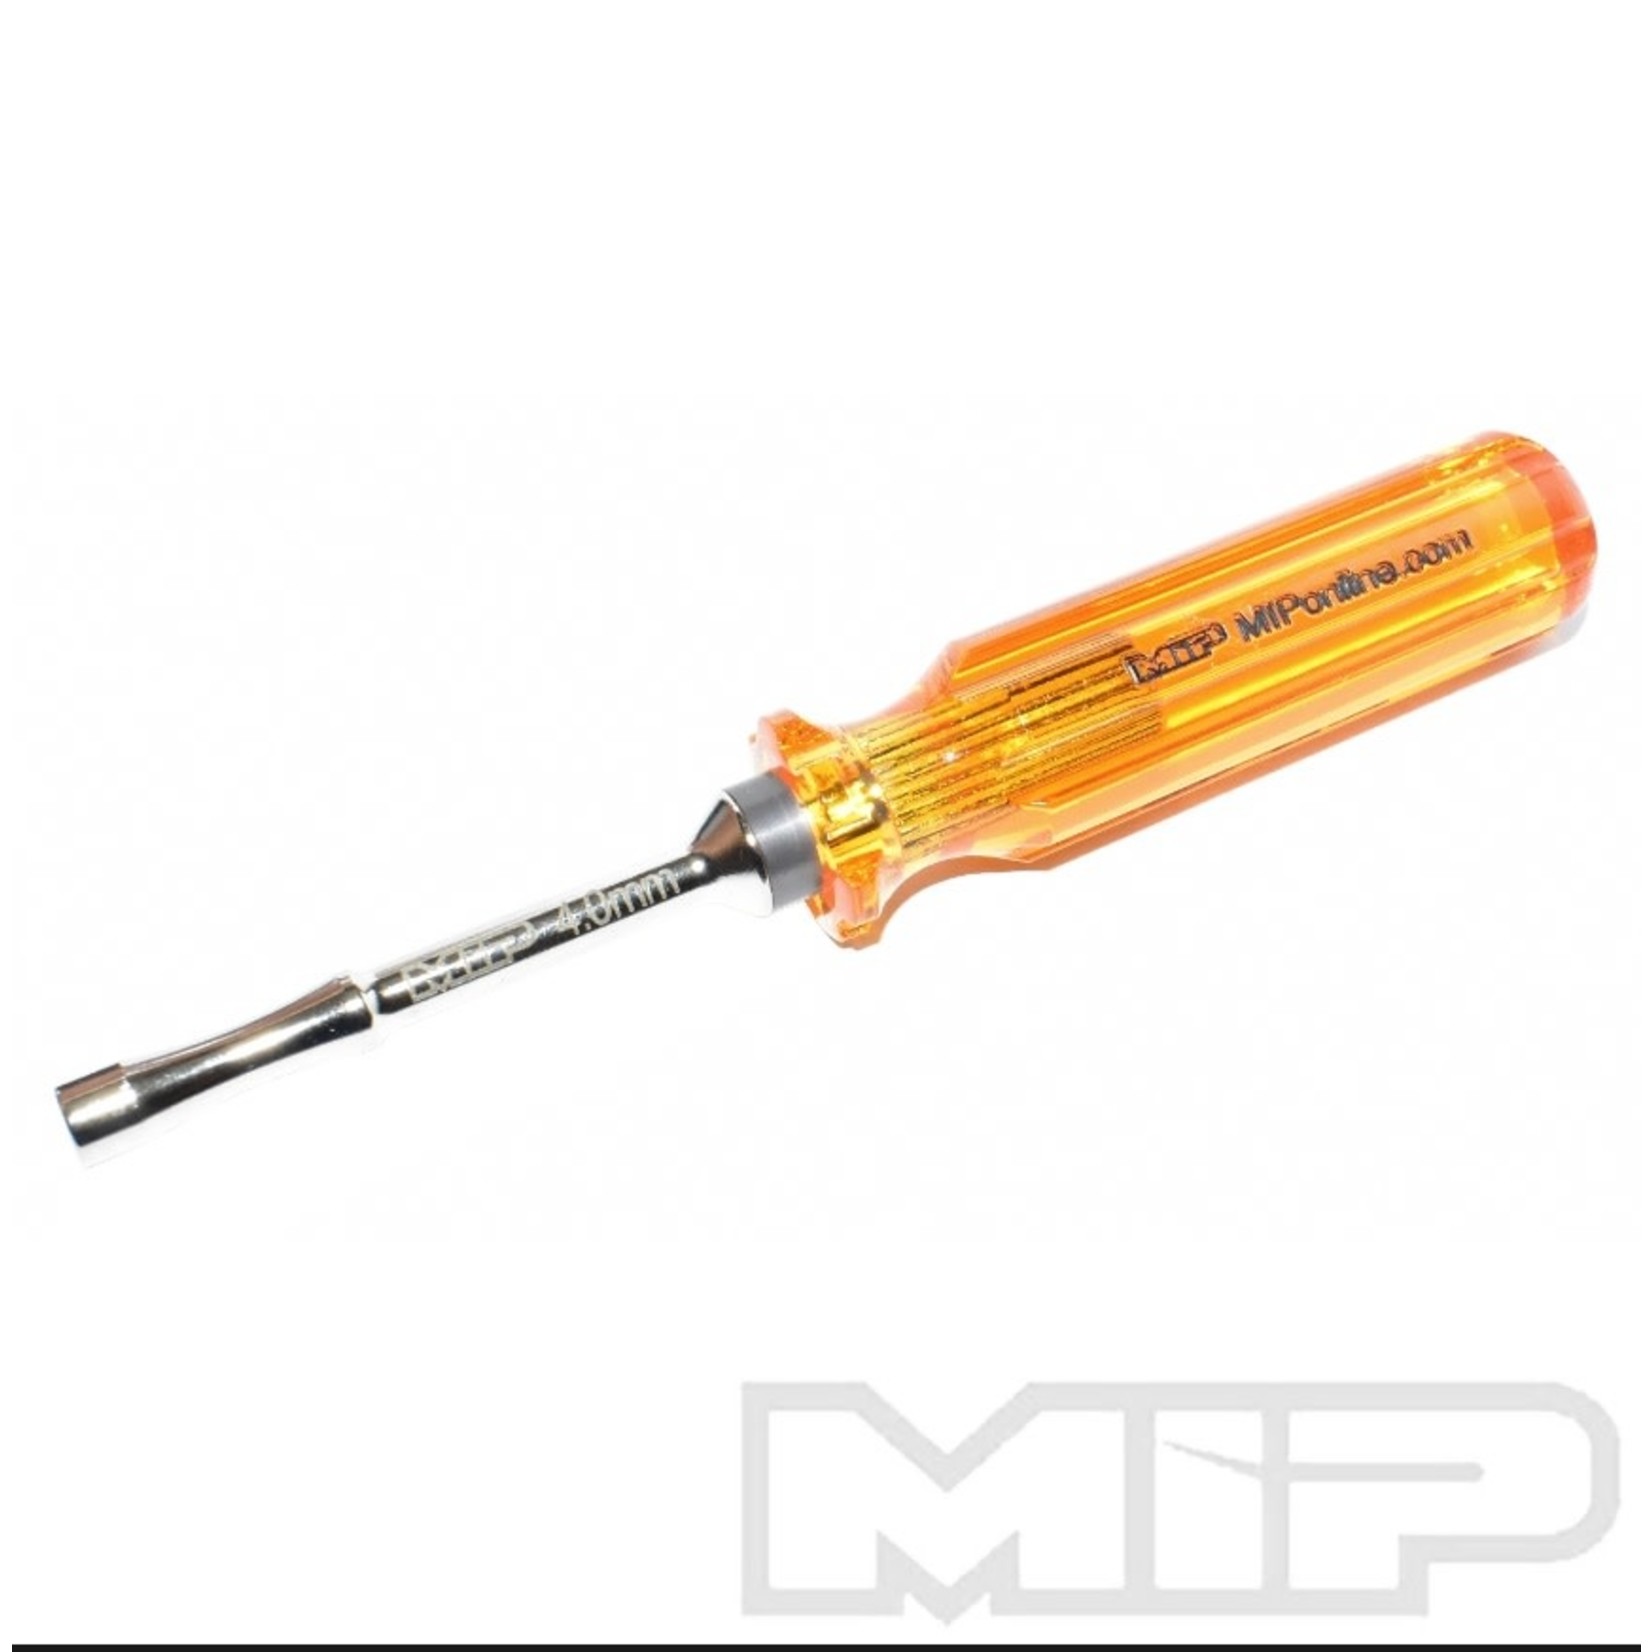 MIP MIP9701 MIP Metric Nut Driver 4.0mm